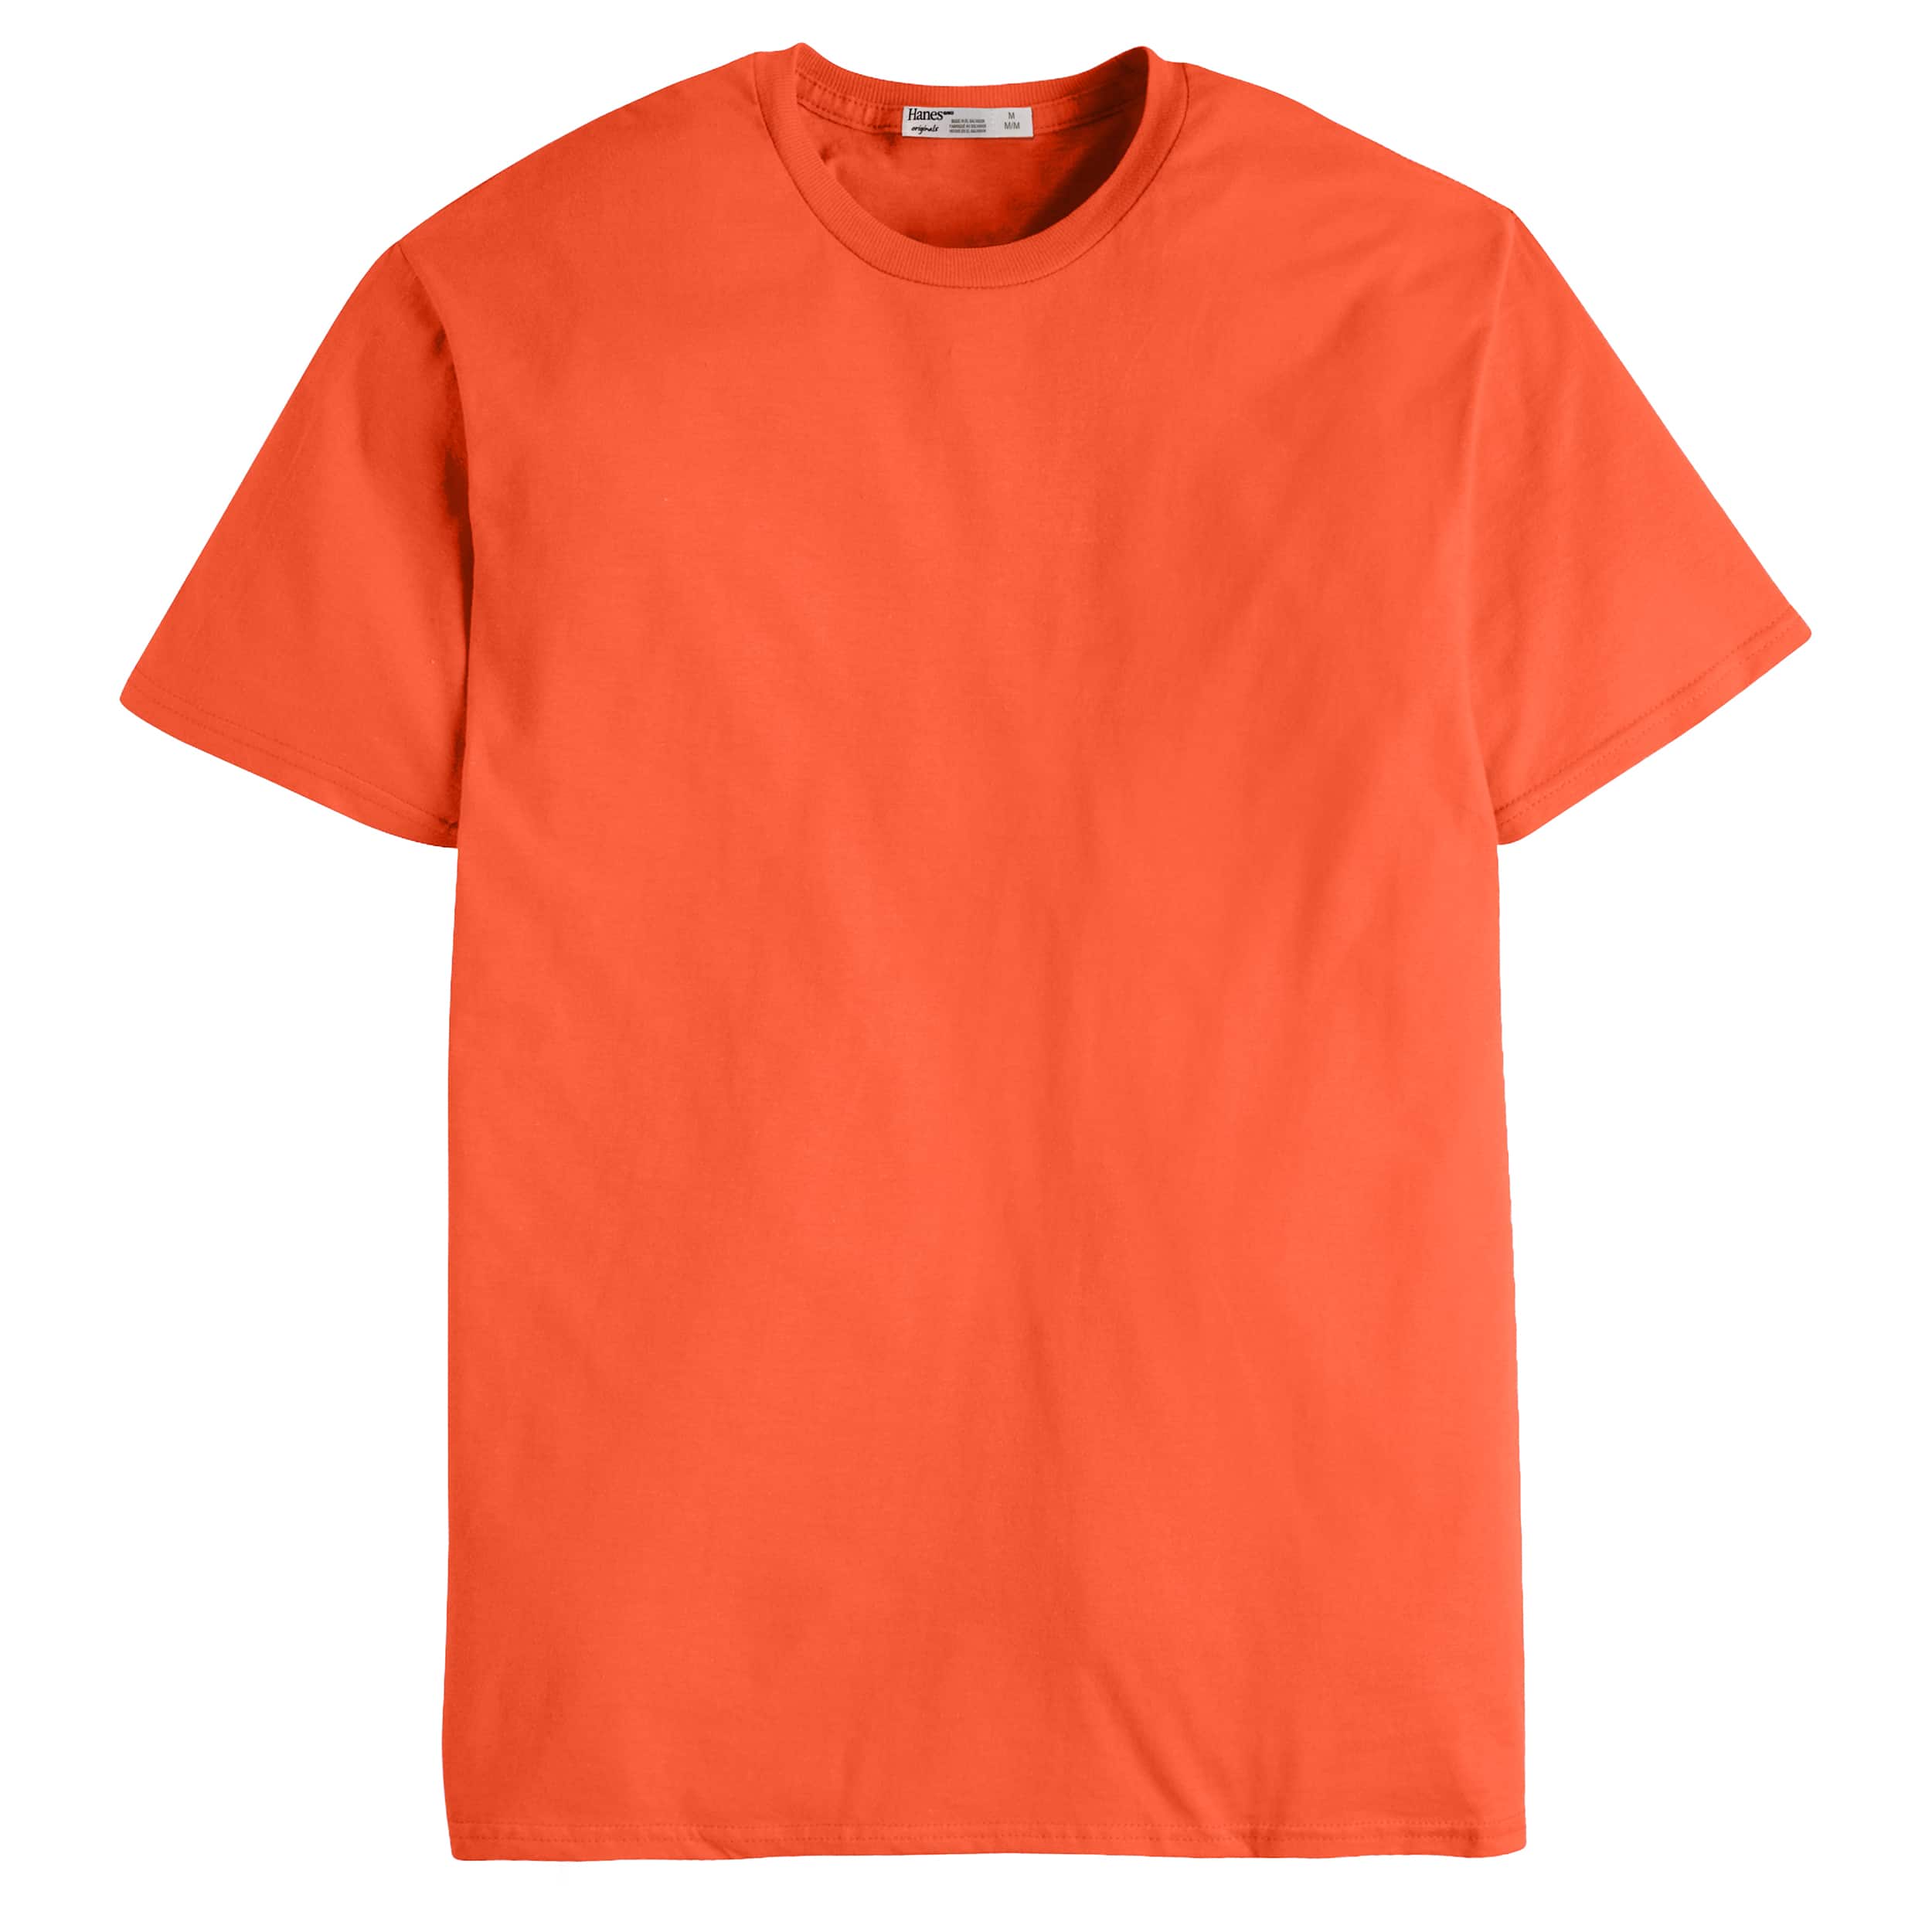 Hanes Men's Hanes Originals Cotton Short Sleeve T-shirt